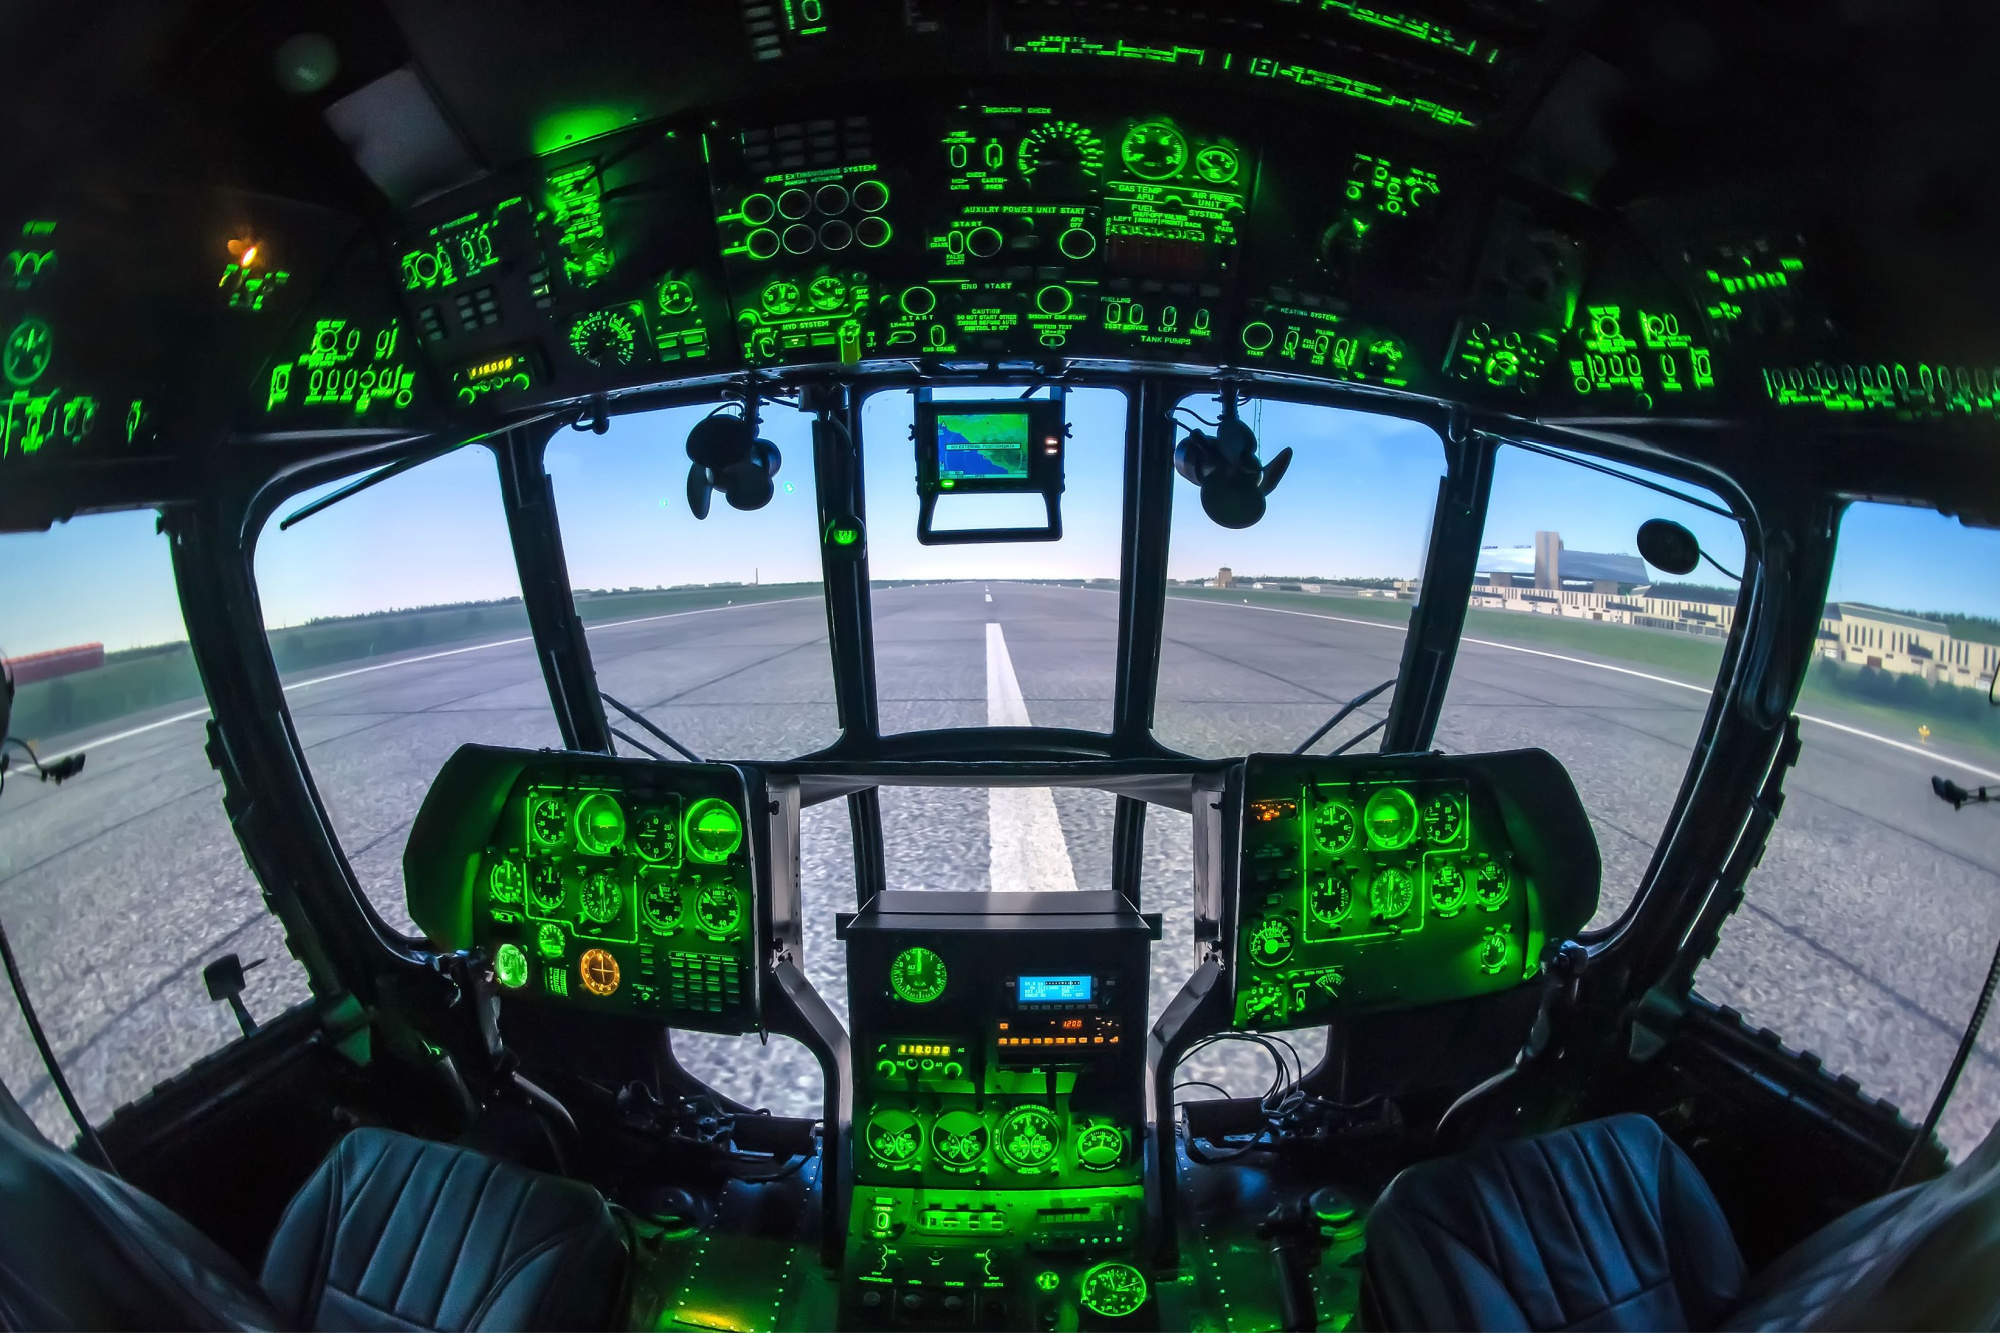 Microsoft Flight Simulator 2024 Takes Aviation Gaming to New